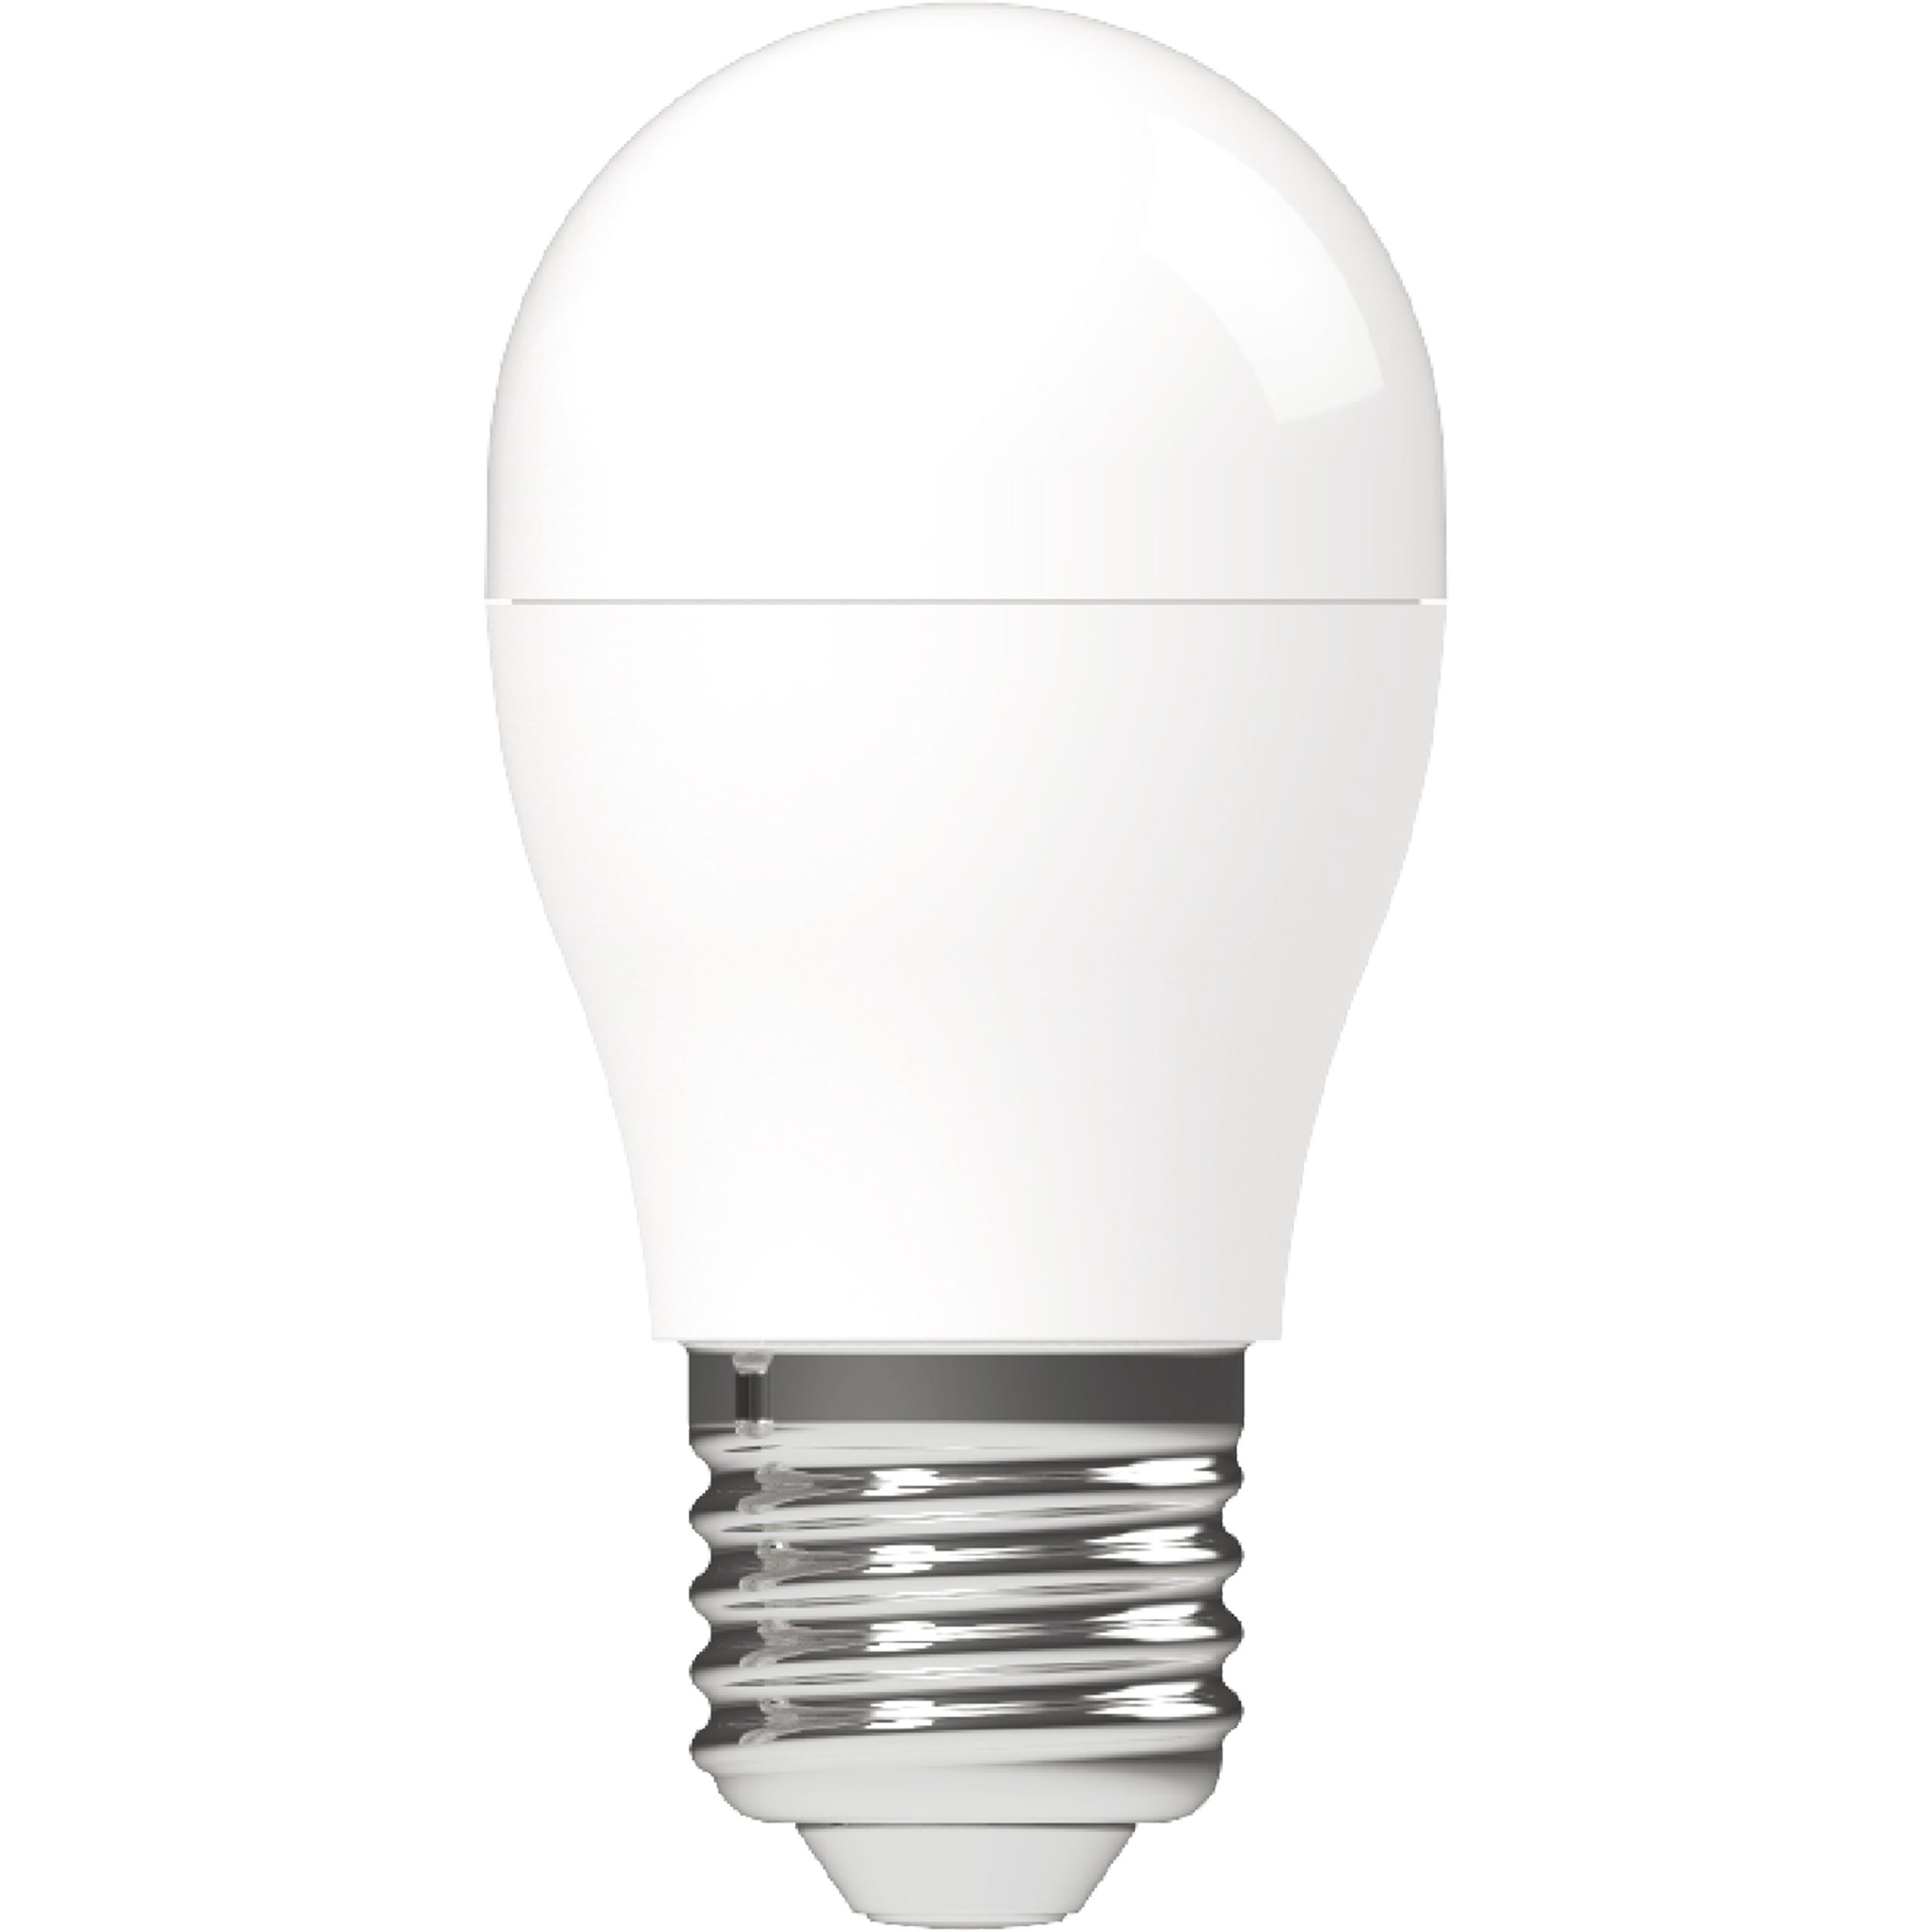 LED's light LED-Leuchtmittel 0620161 LED Kugel, E27, E27 2,9W warmweiß Opal G45 - 50.000h Haltbarkeit